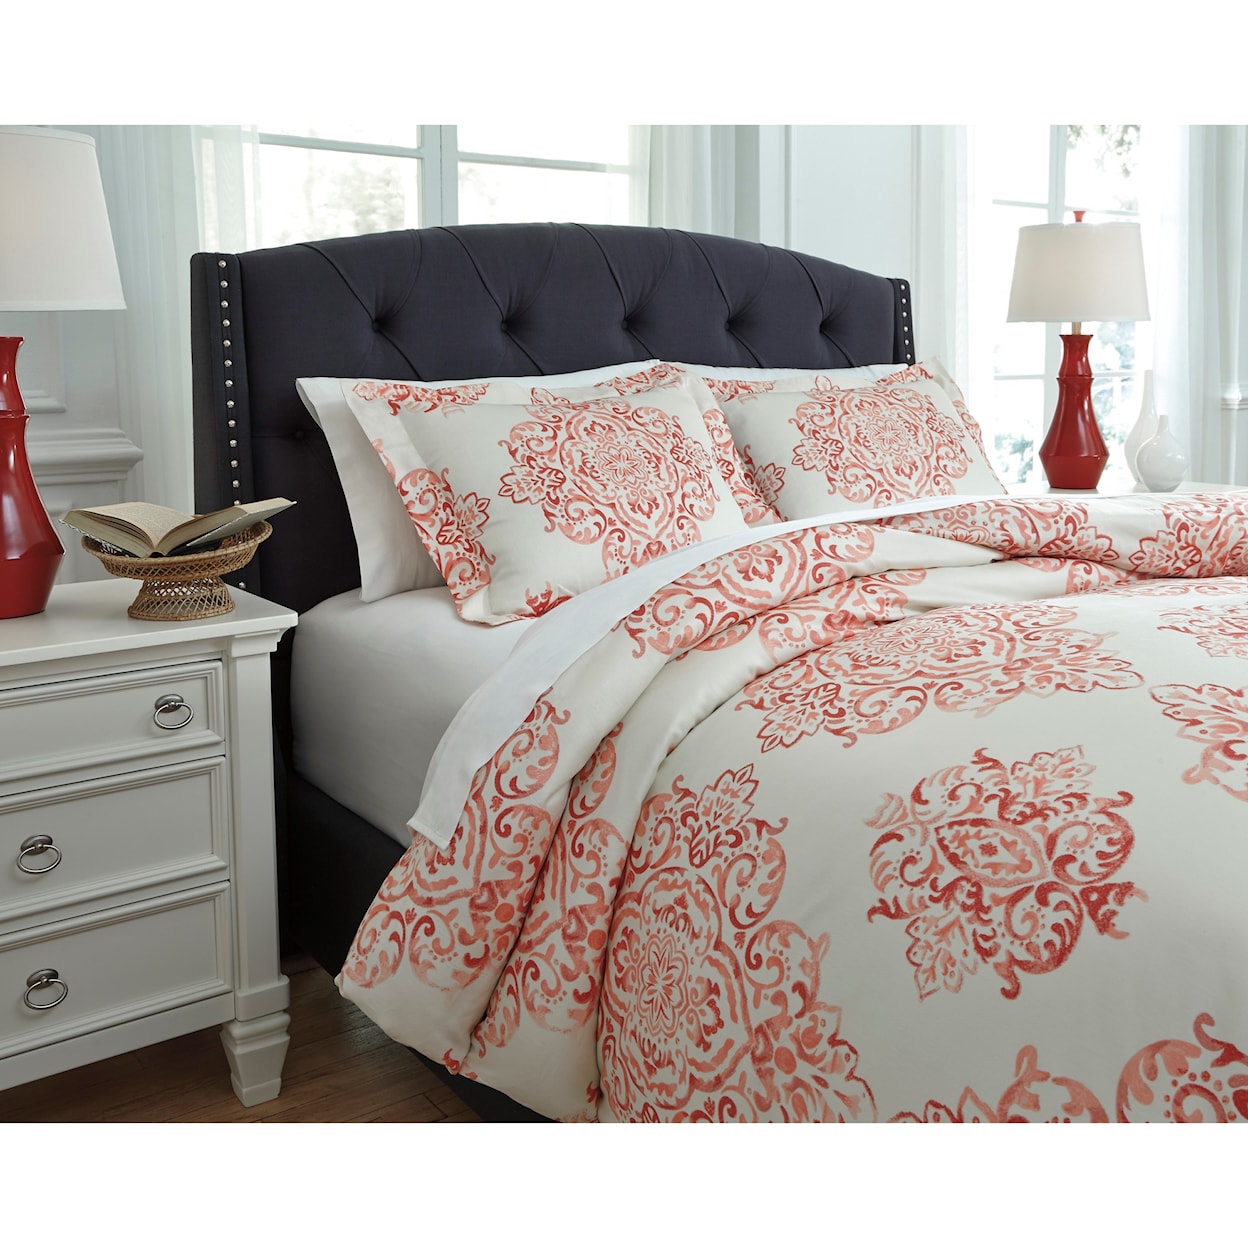 Signature Design by Ashley Furniture Bedding Sets Queen Fairholm Coral Duvet Cover Set